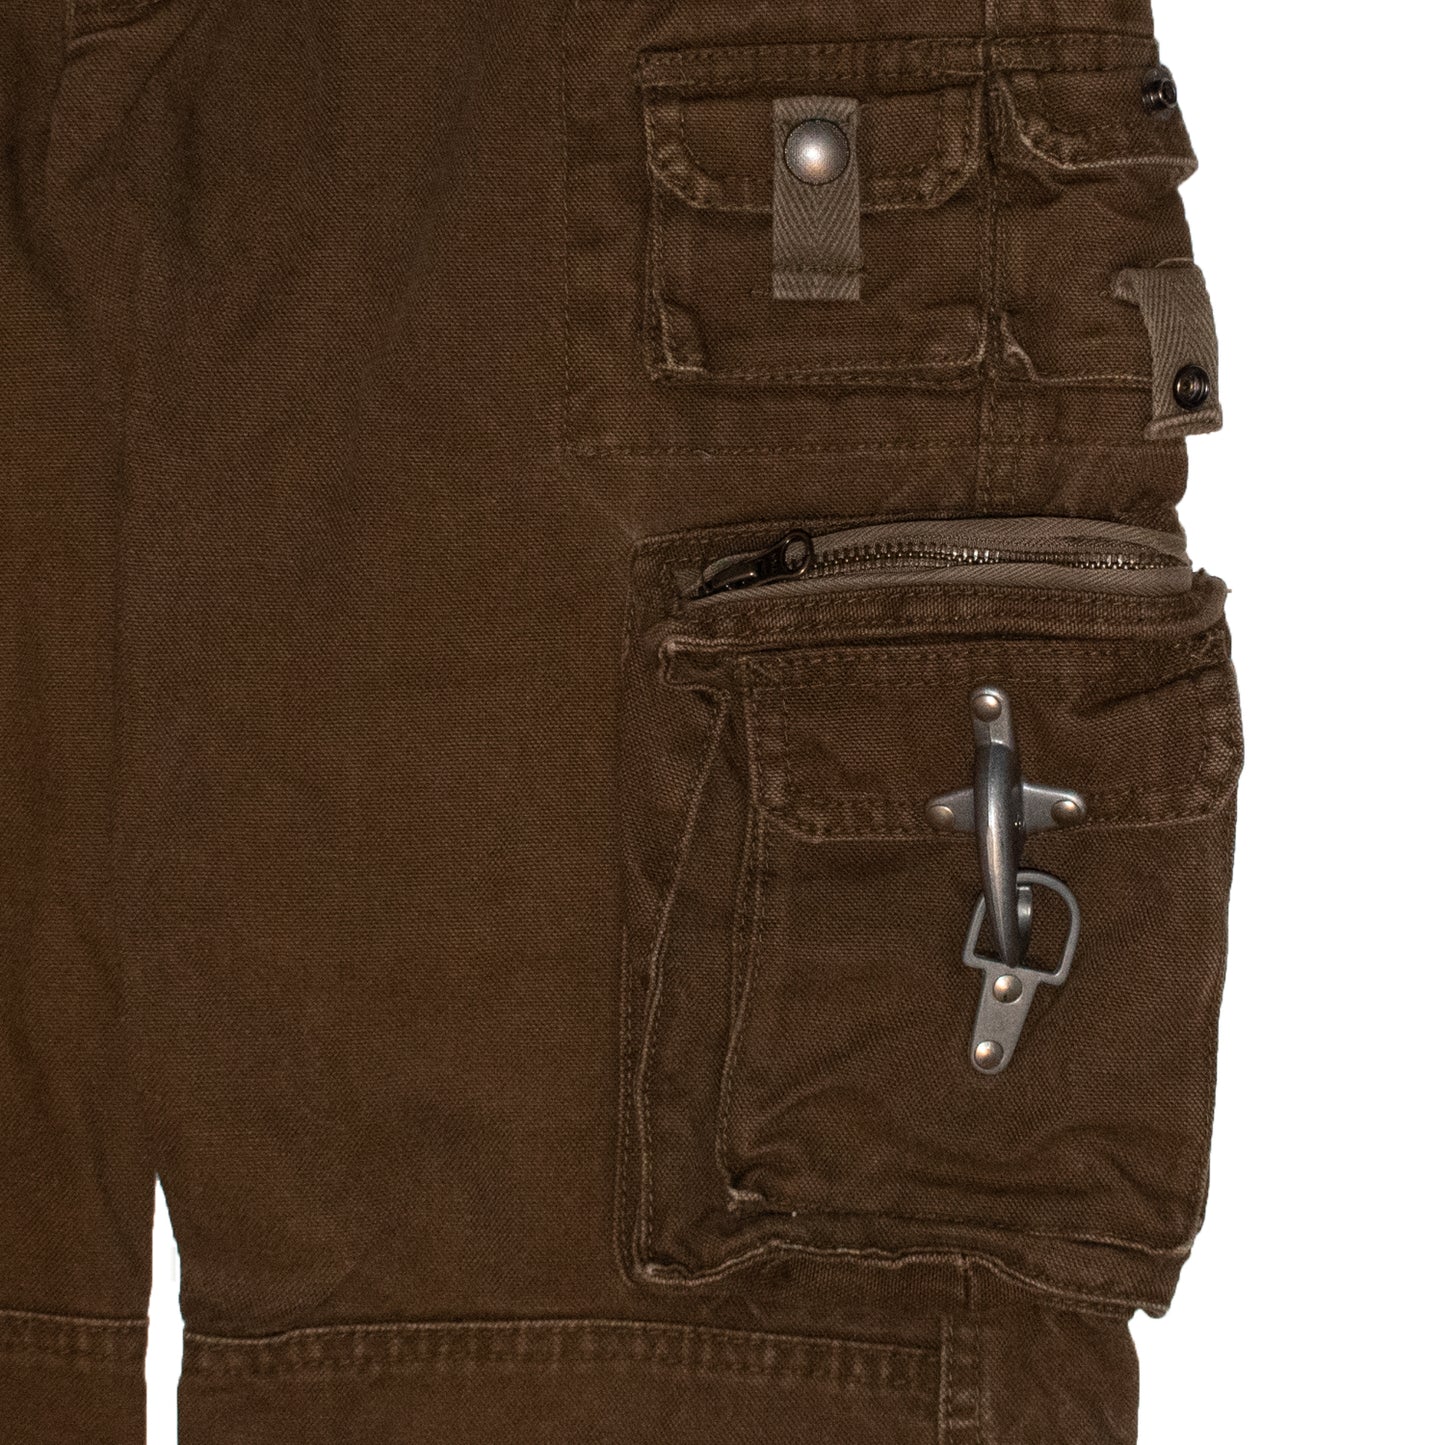 PPFM 12-Pocket Cargo Pants